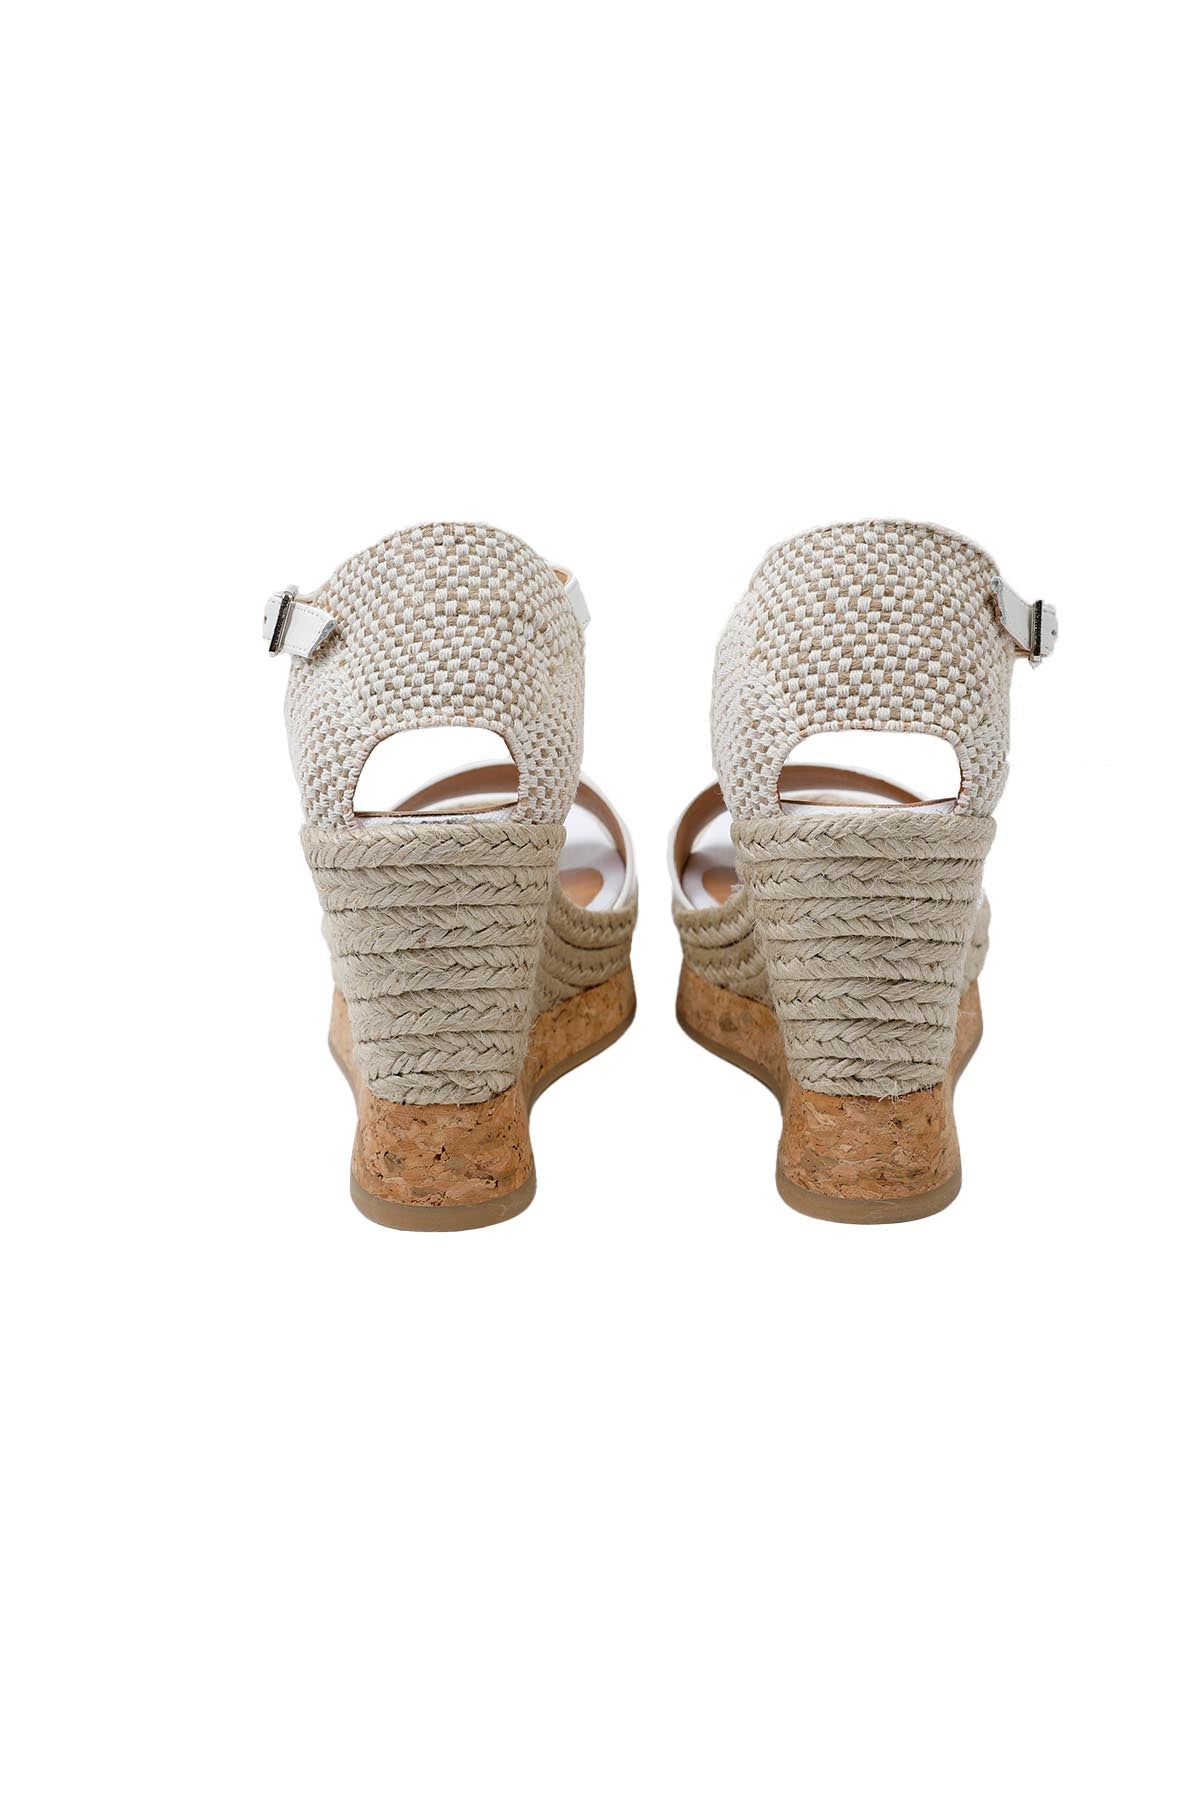 Kanna Hasır Dolgu Topuklu Küt Burun Sandalet-Libas Trendy Fashion Store